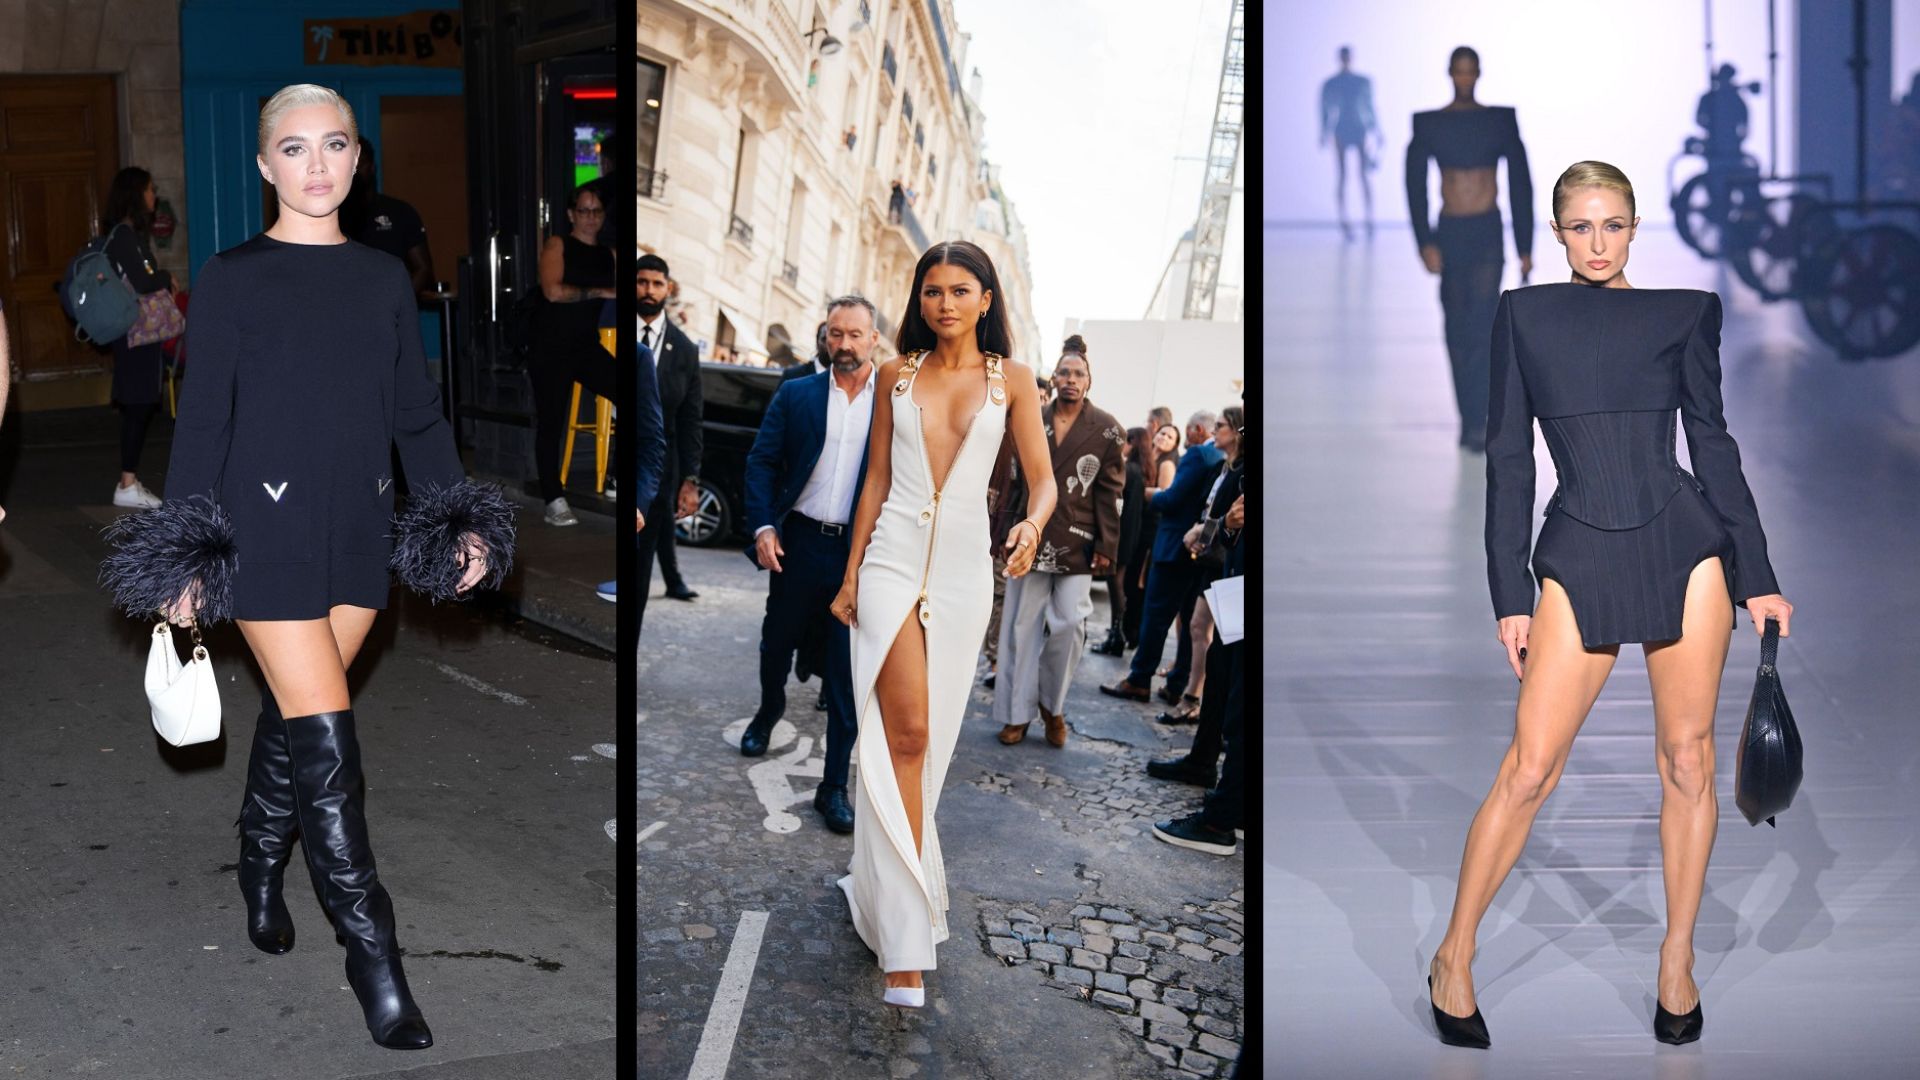 Sydney Sweeney, Florence Pugh, Zendaya and Paris Hilton are the celebrities attending Paris Fashion Week!